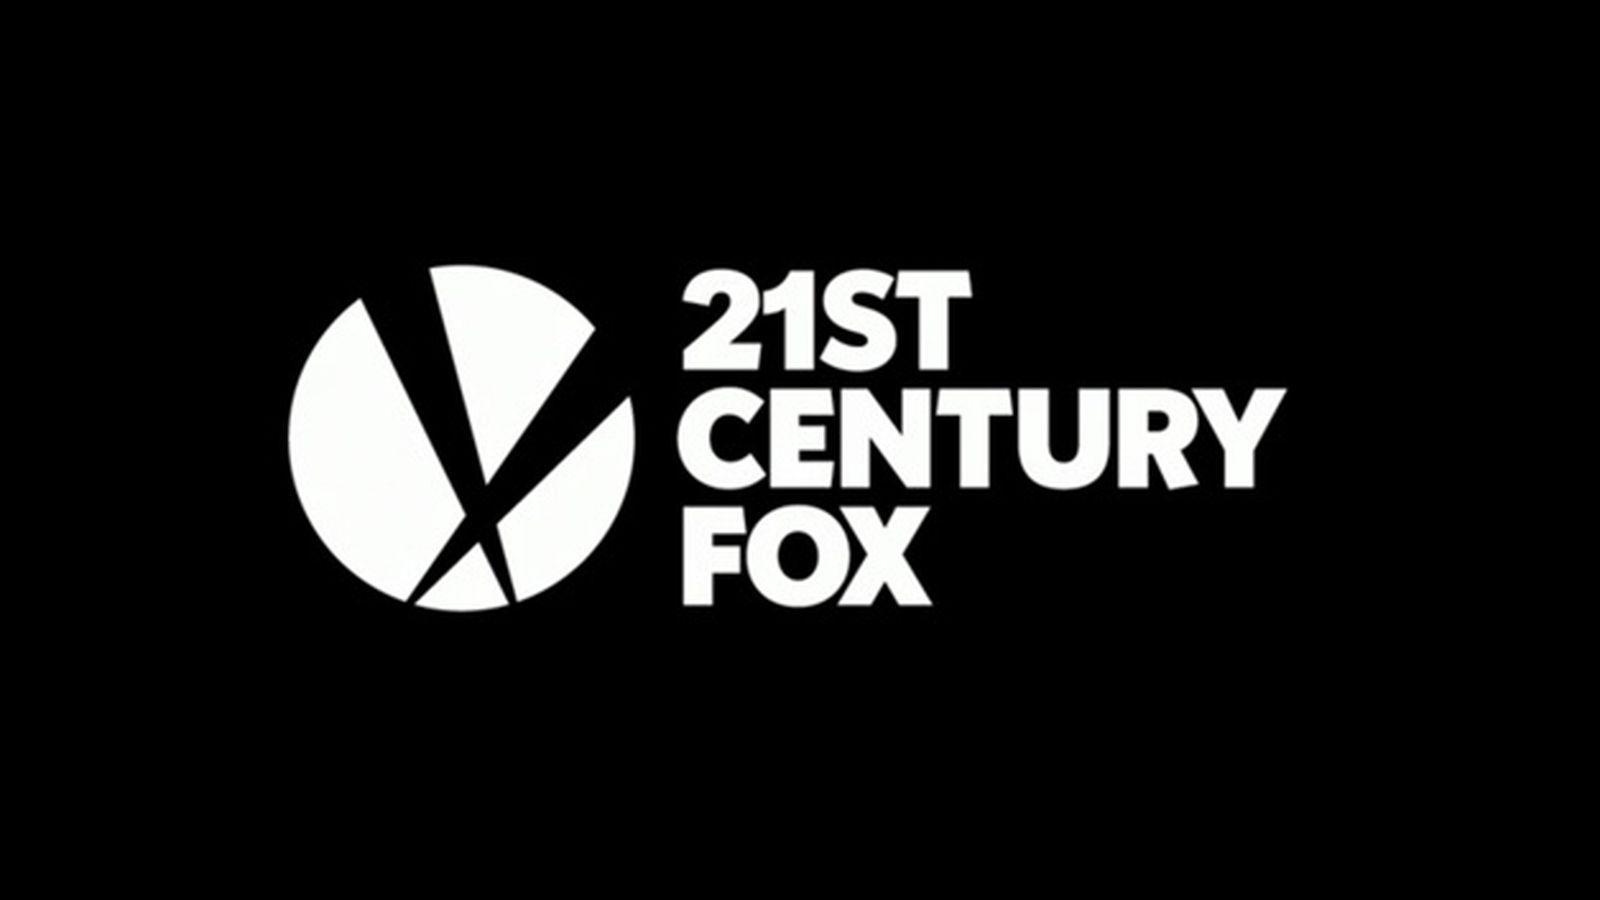 Twentieth Logo - 21st Century Fox logo unveiled ahead of News Corp split - The Verge